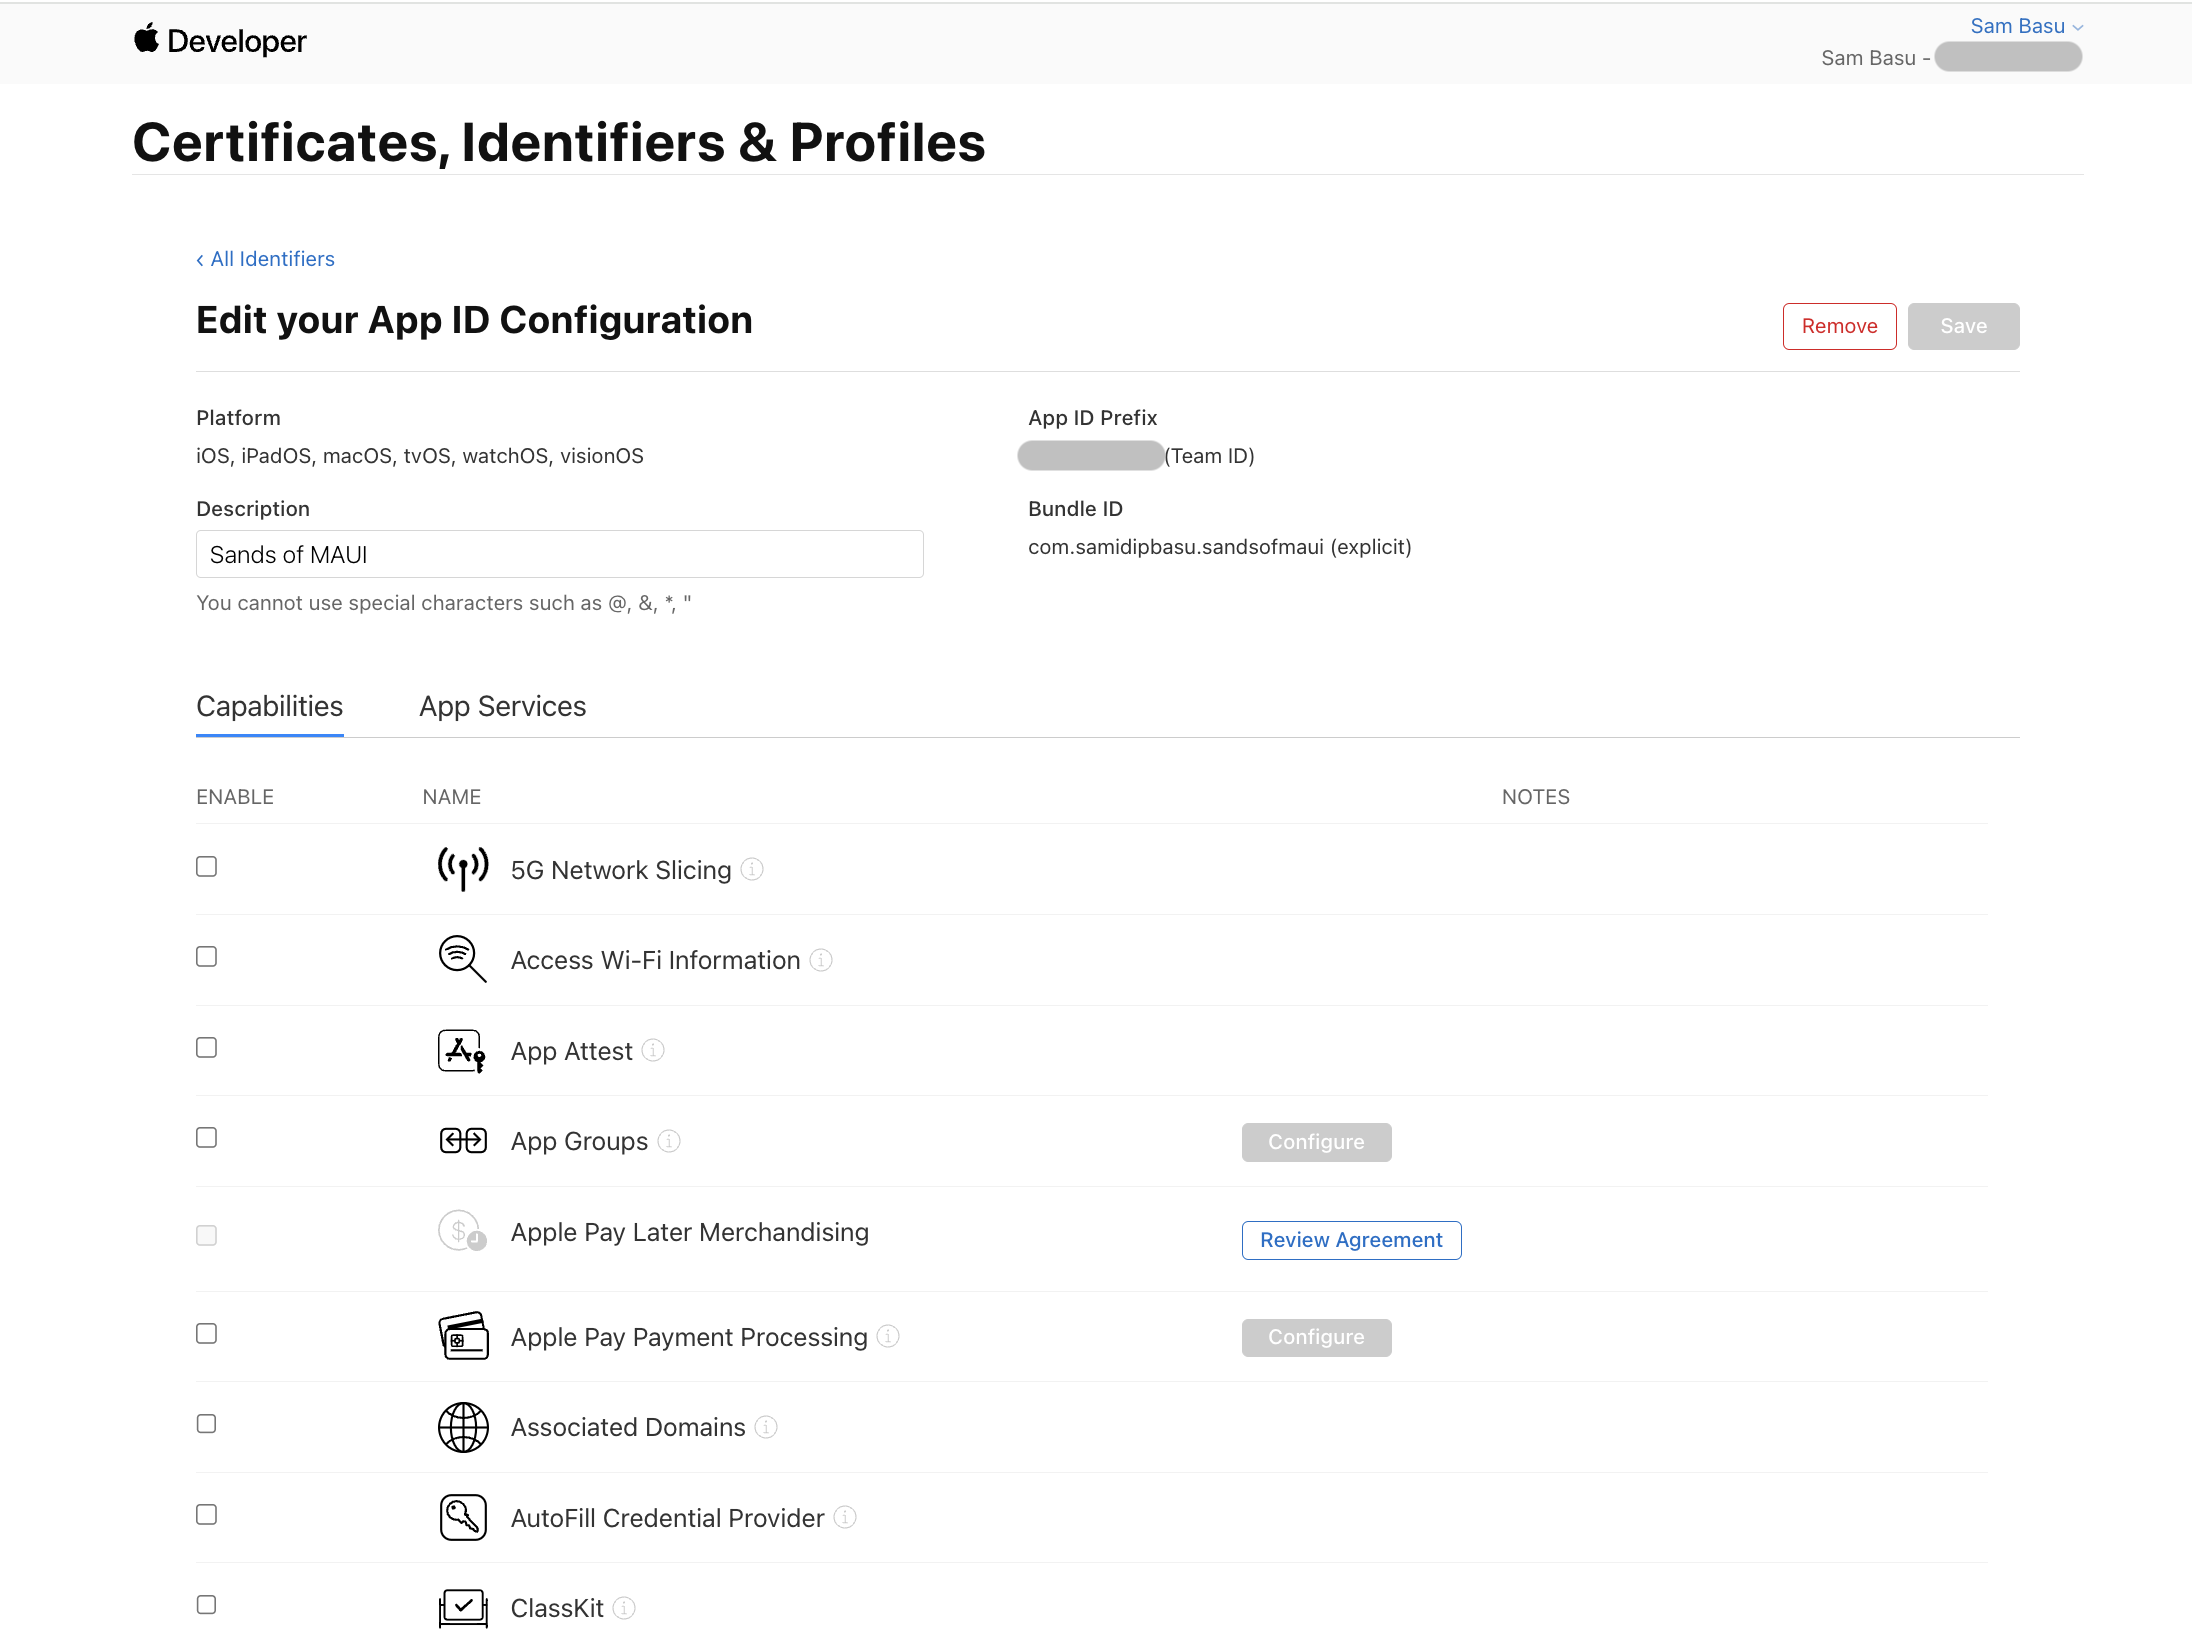 Certificates, identifiers, Profiles - edit your App ID Configuration